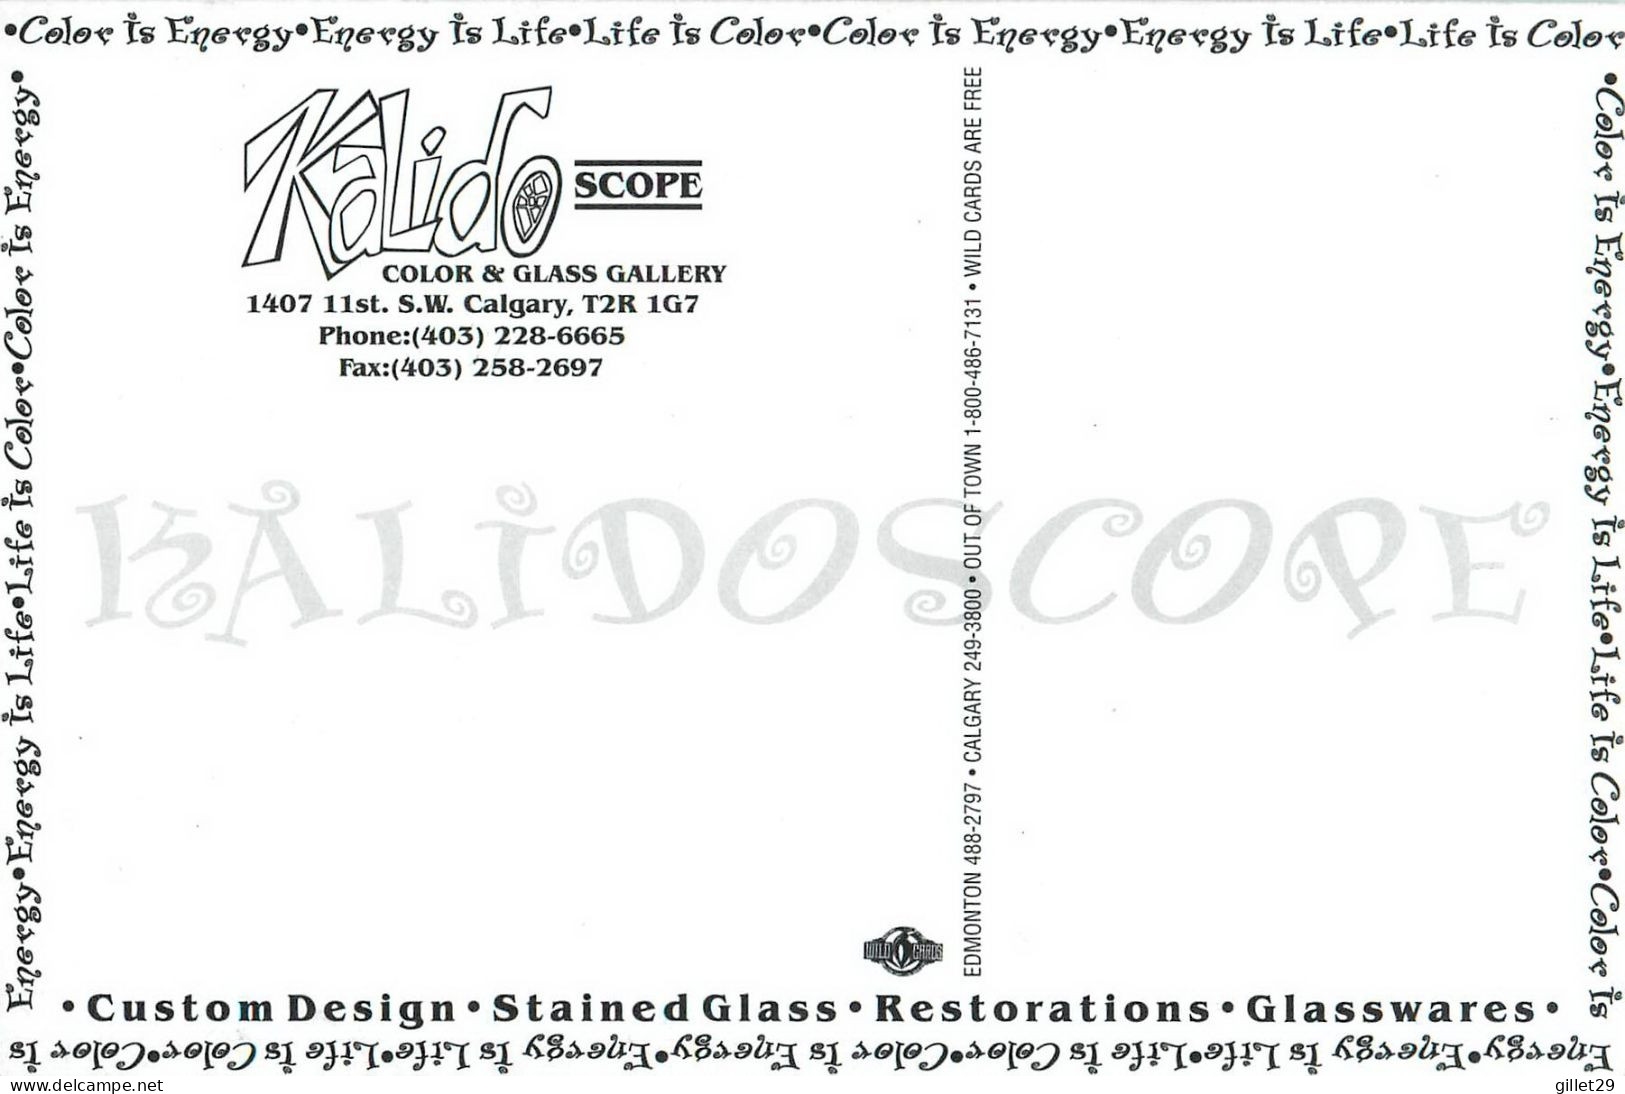 PUBLICITÉ - ADVERTISING - KALIDO SCOPE, COLOR & GLASS GALLERY, CALGARY, ALBERTA - GLASS IS THE MEDIUM - - Publicité